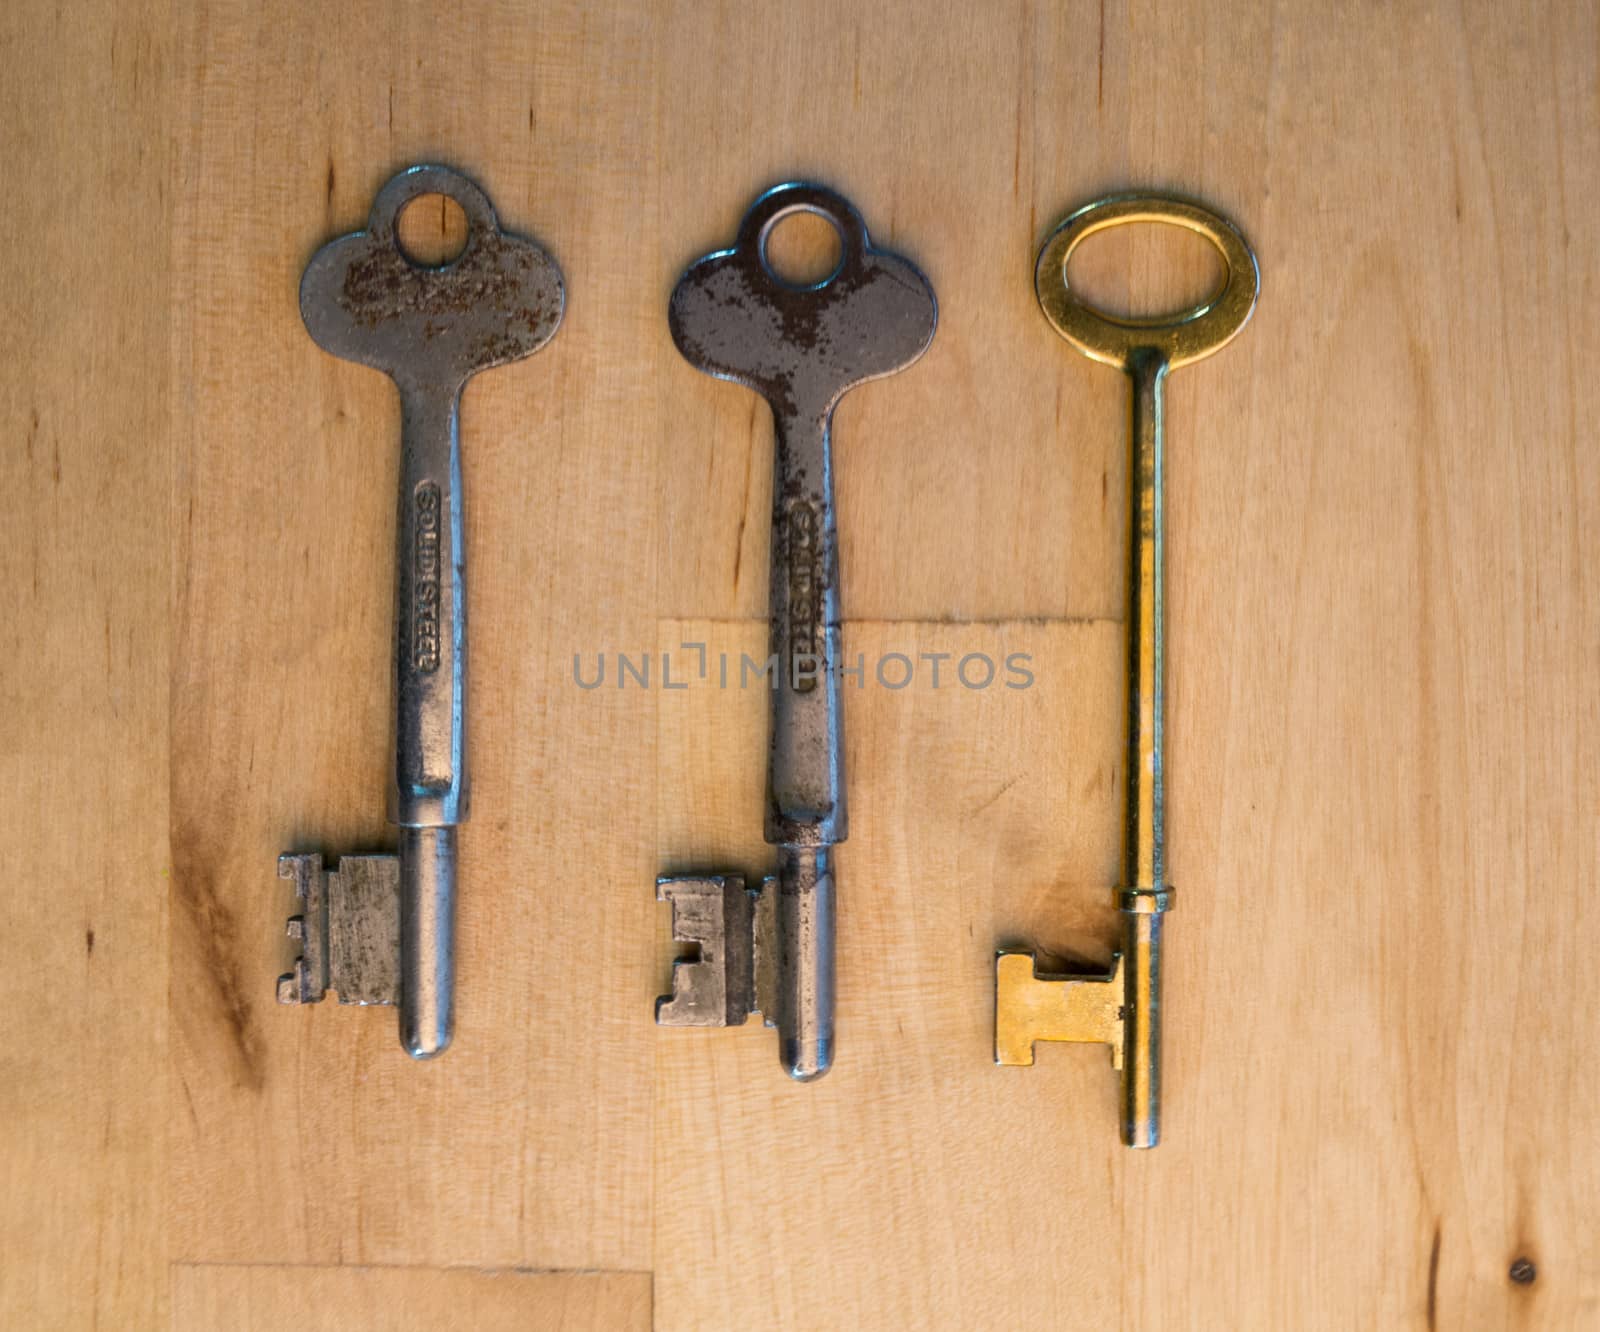 Three different keys on wood by wit_gorski